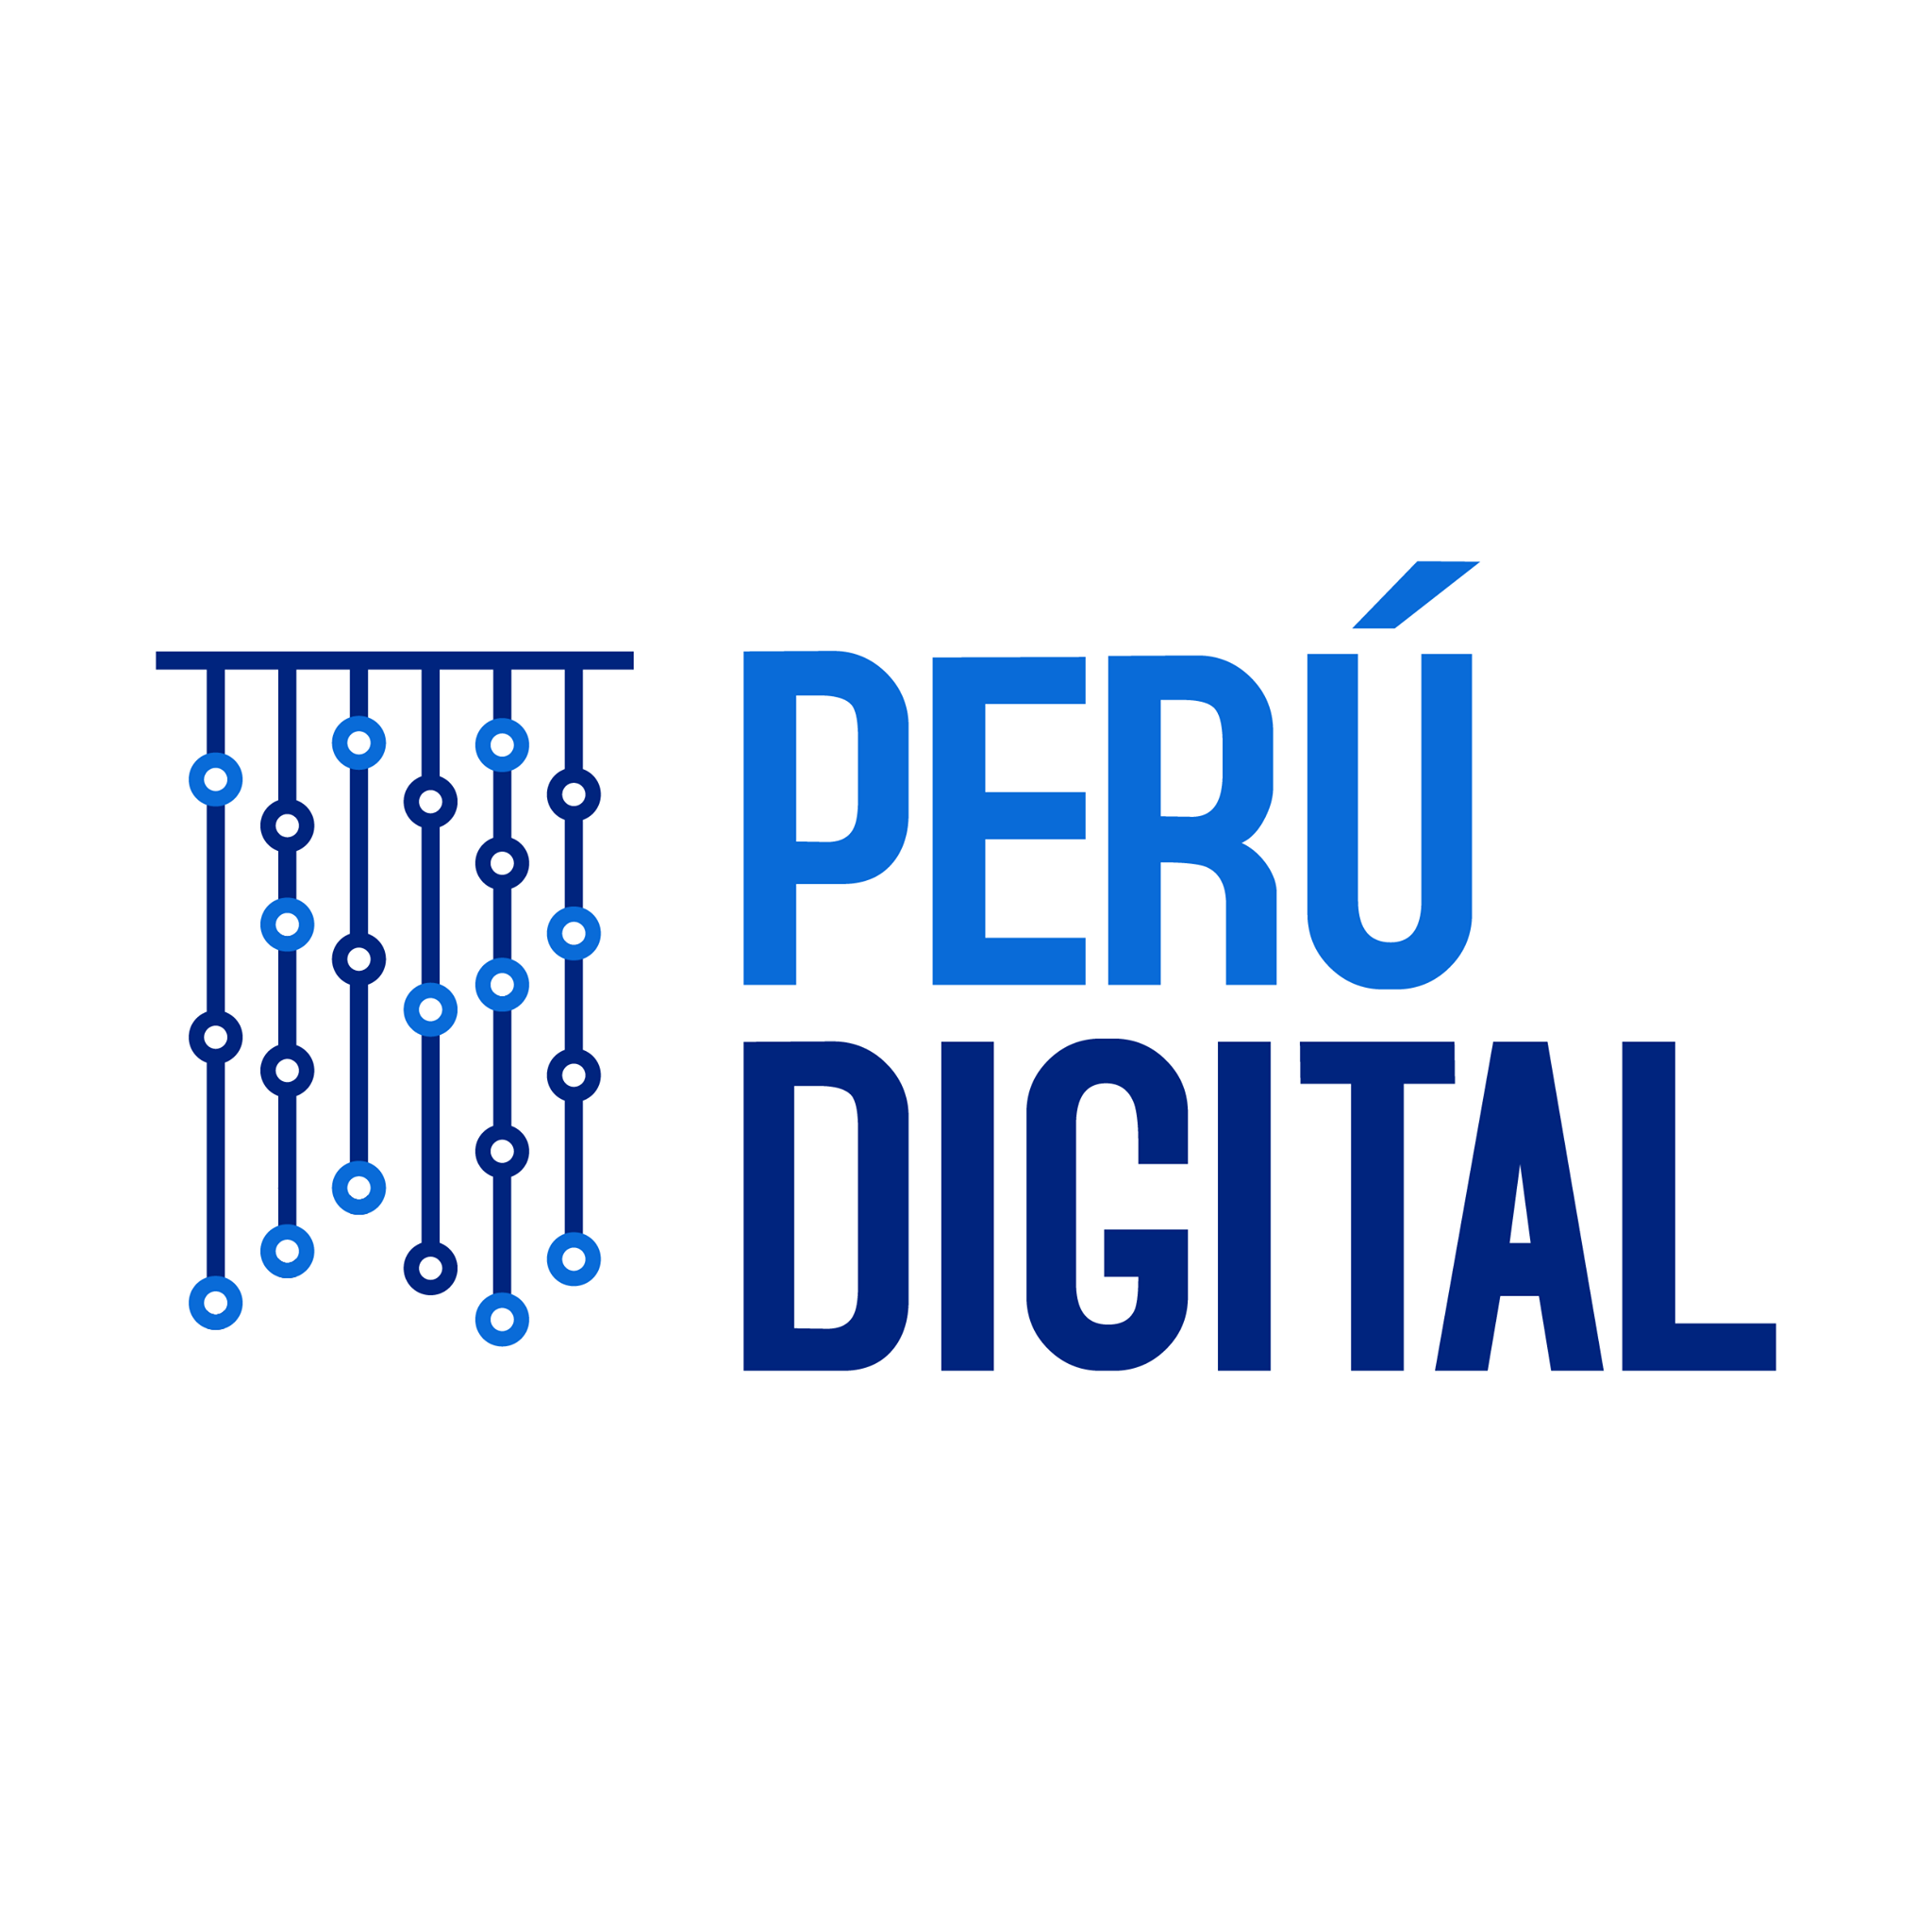 Hosting Perú Digital